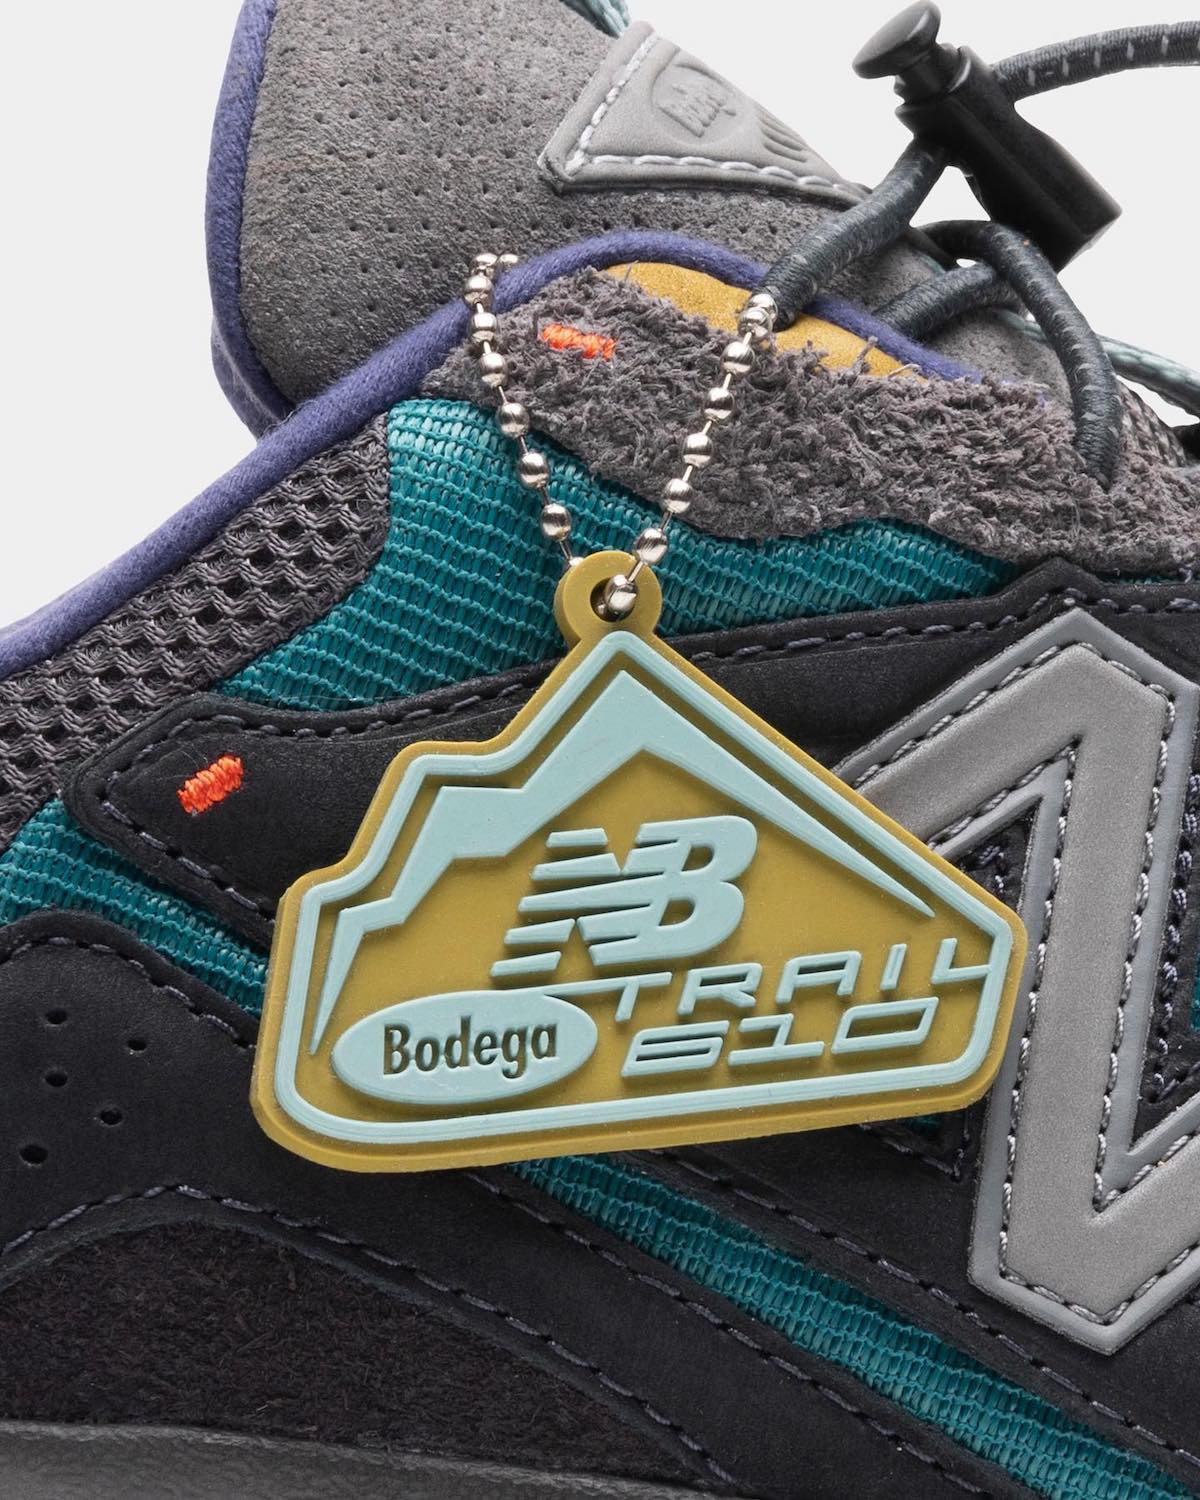 Bodega New Balance 610 Release Date